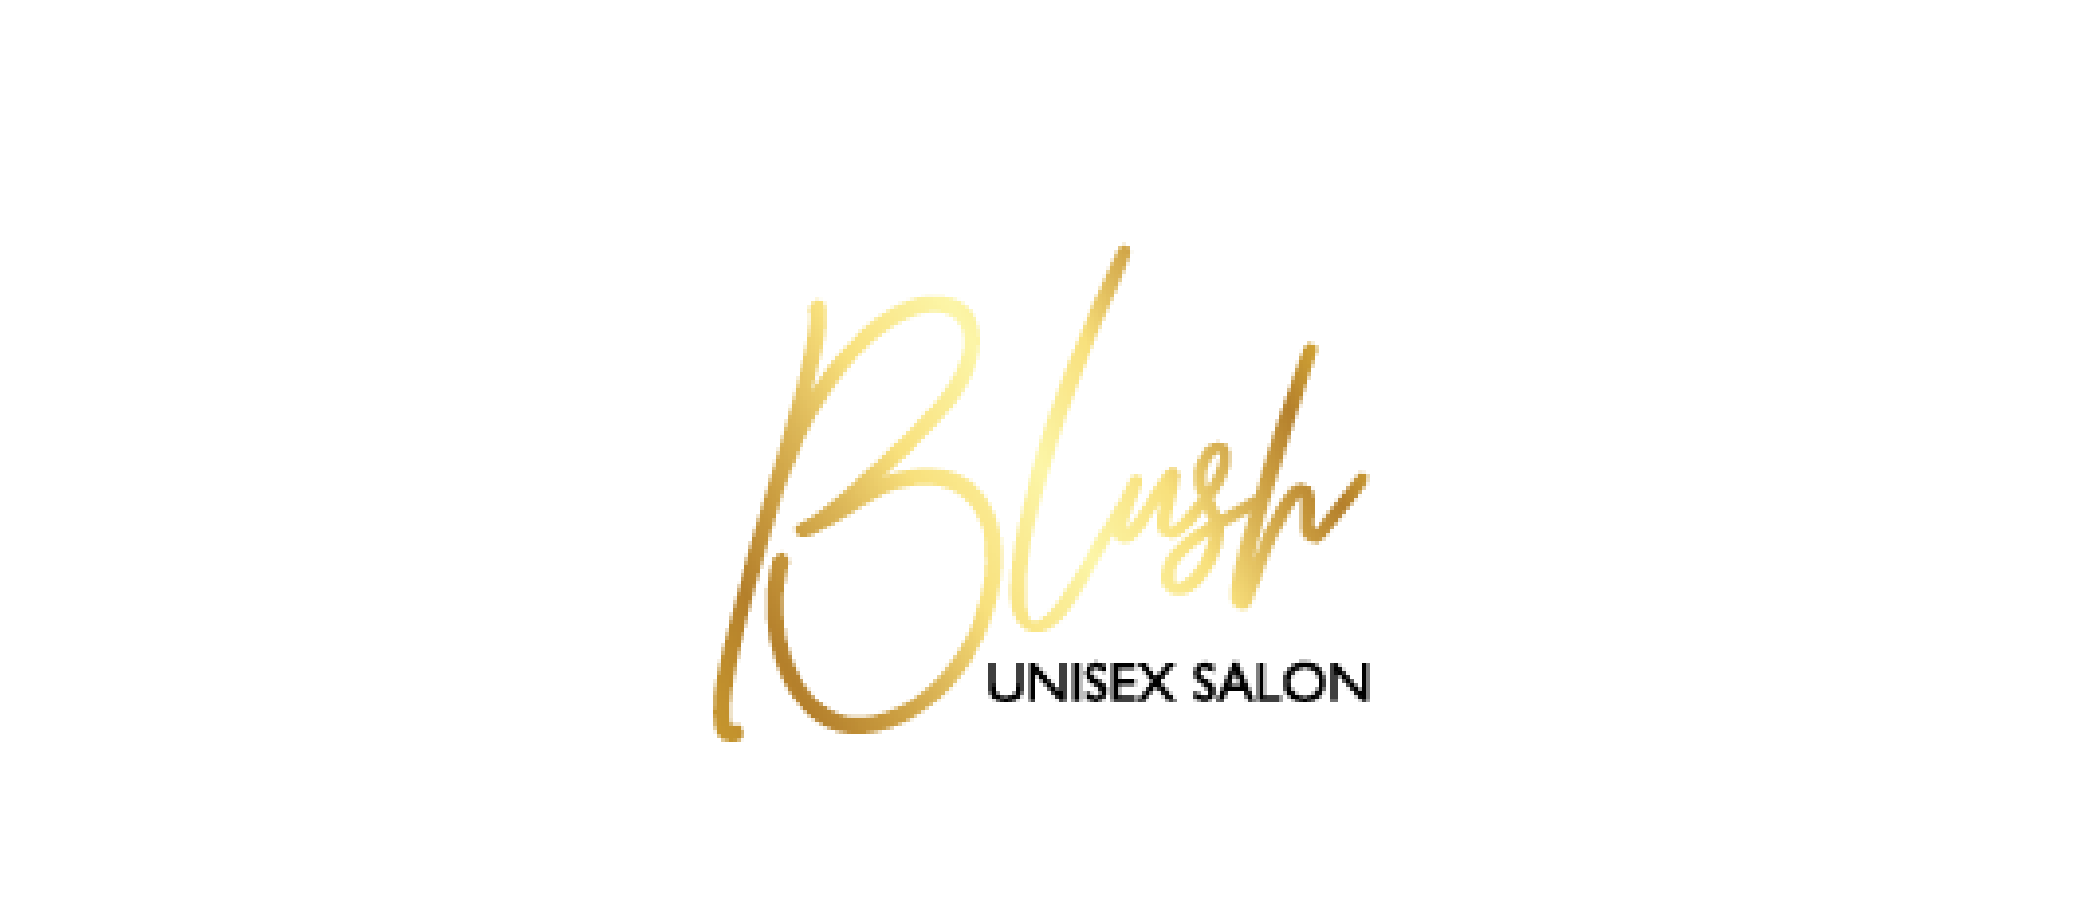 Blush Hair Salon - Client - DesignPro Digital Agency In Gulbarga